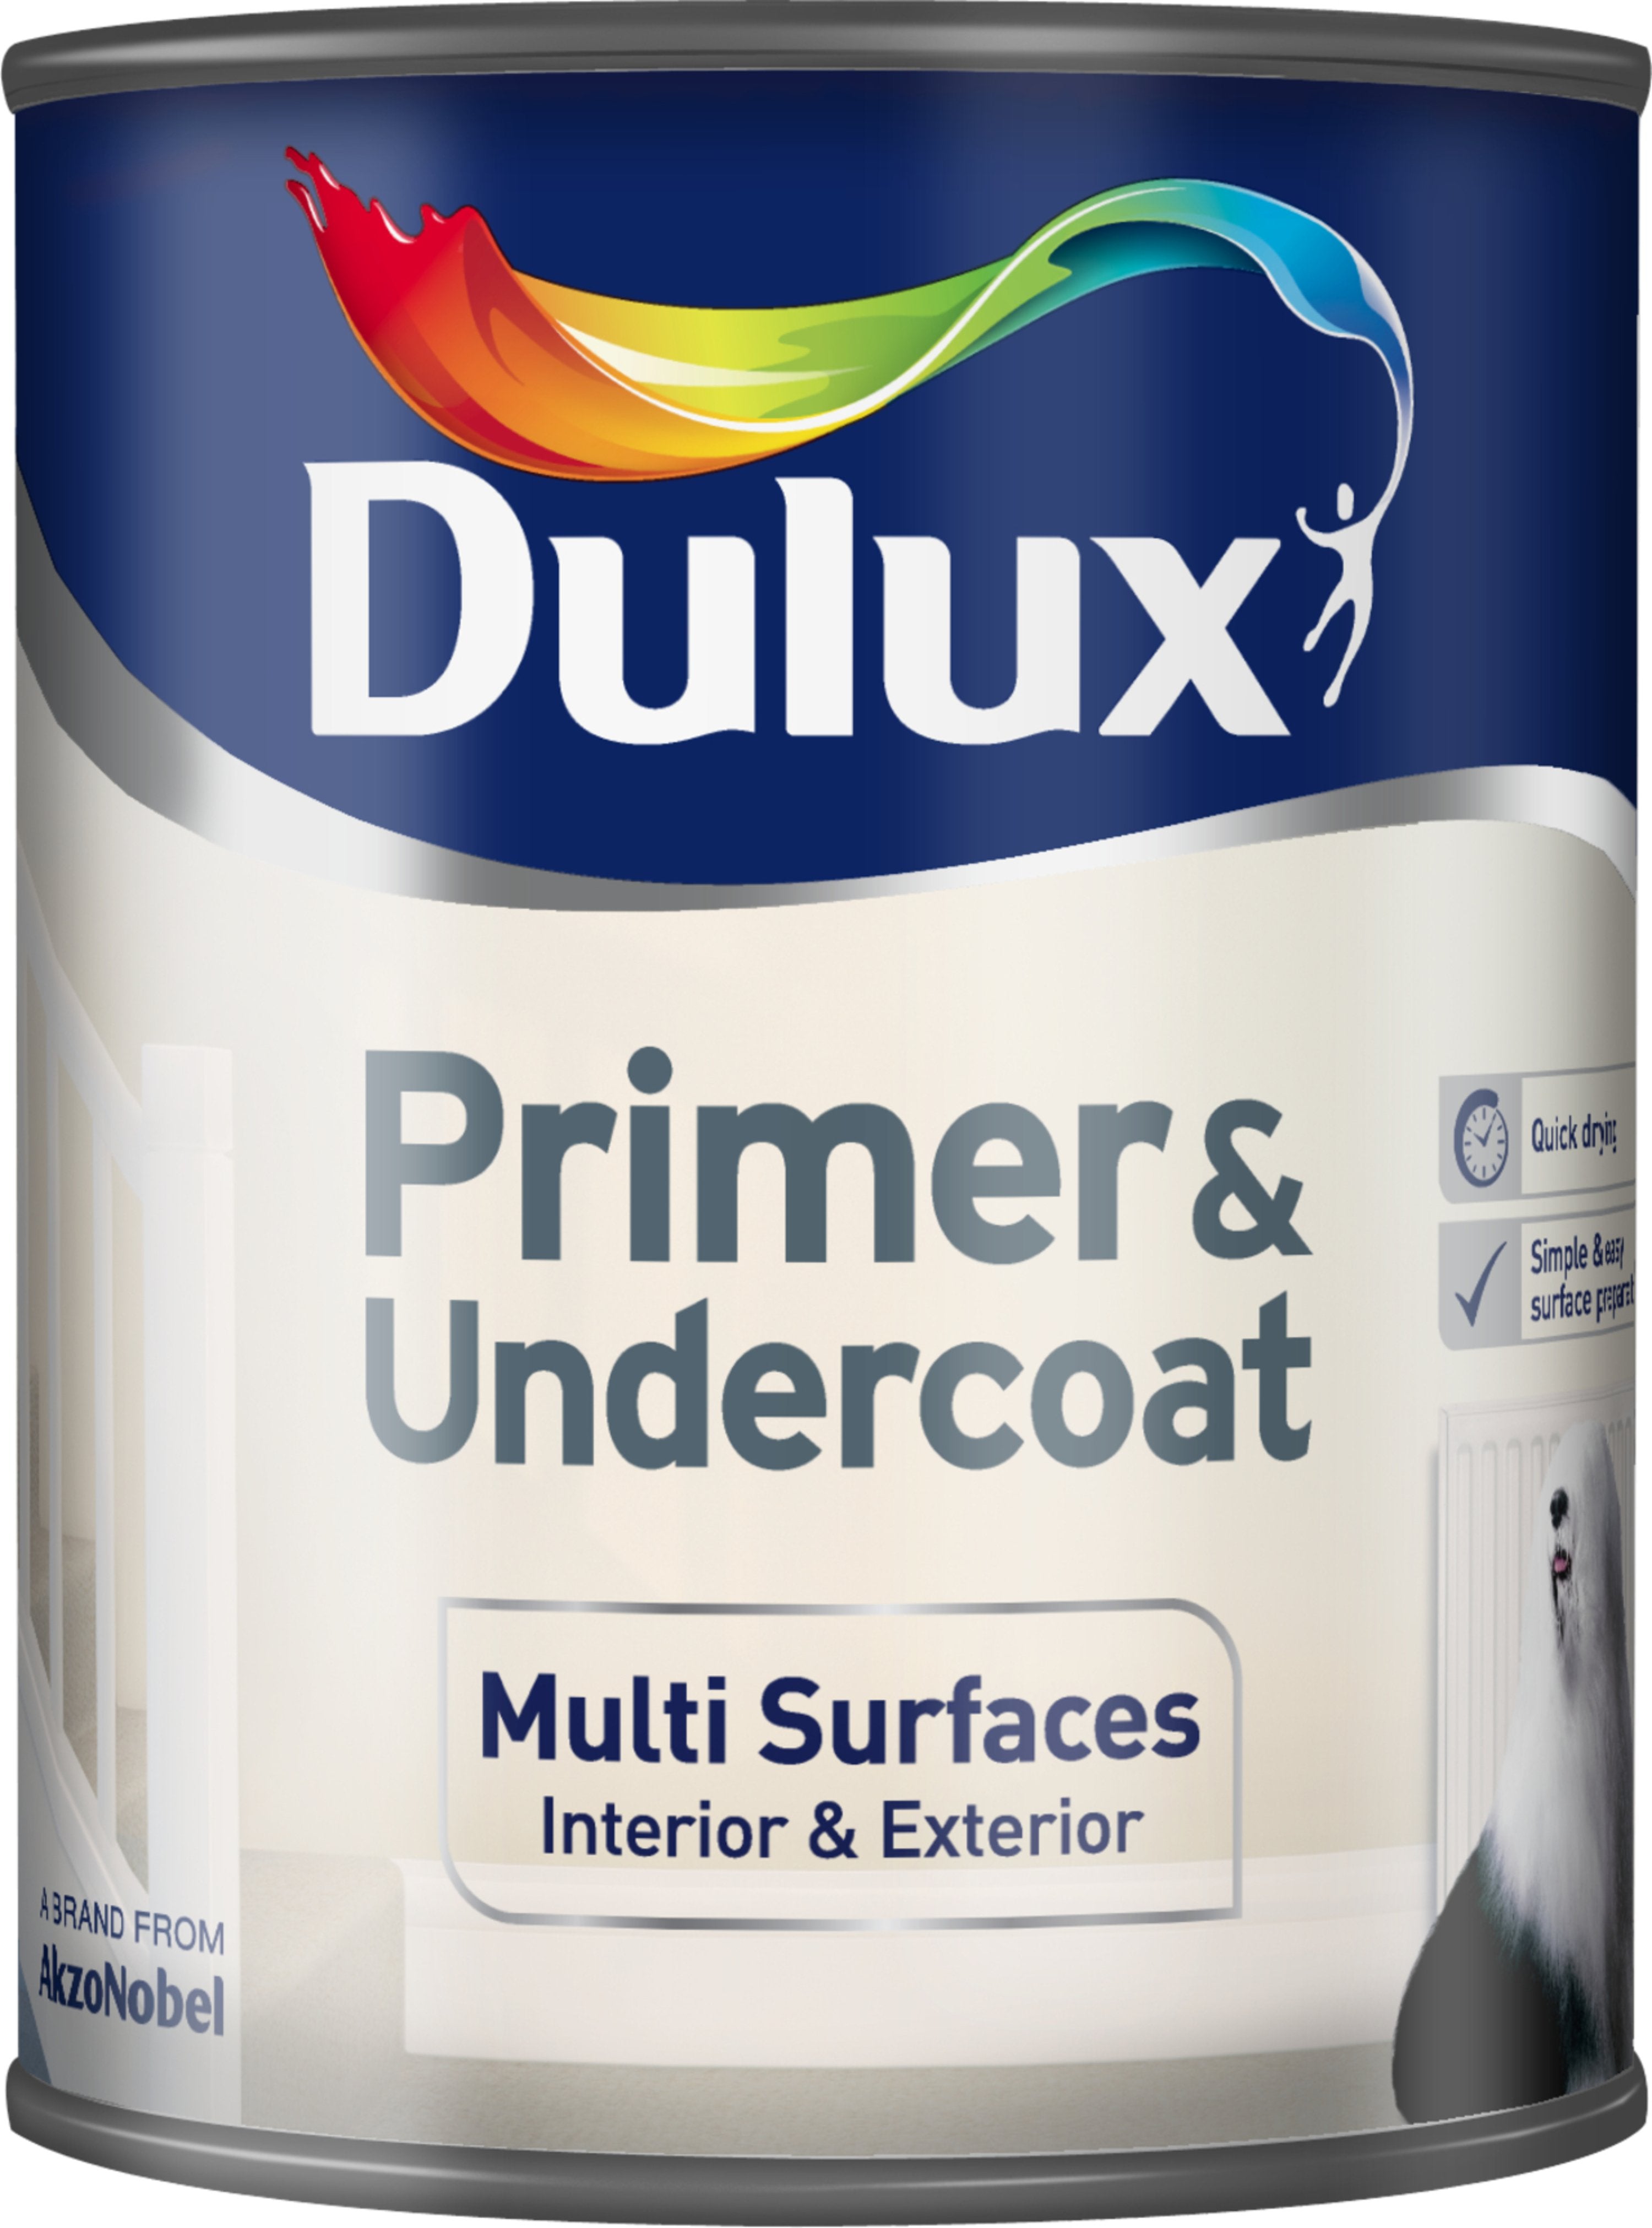 Dulux-Primer-&-Undercoat-for-Multi-Surfaces-750ml